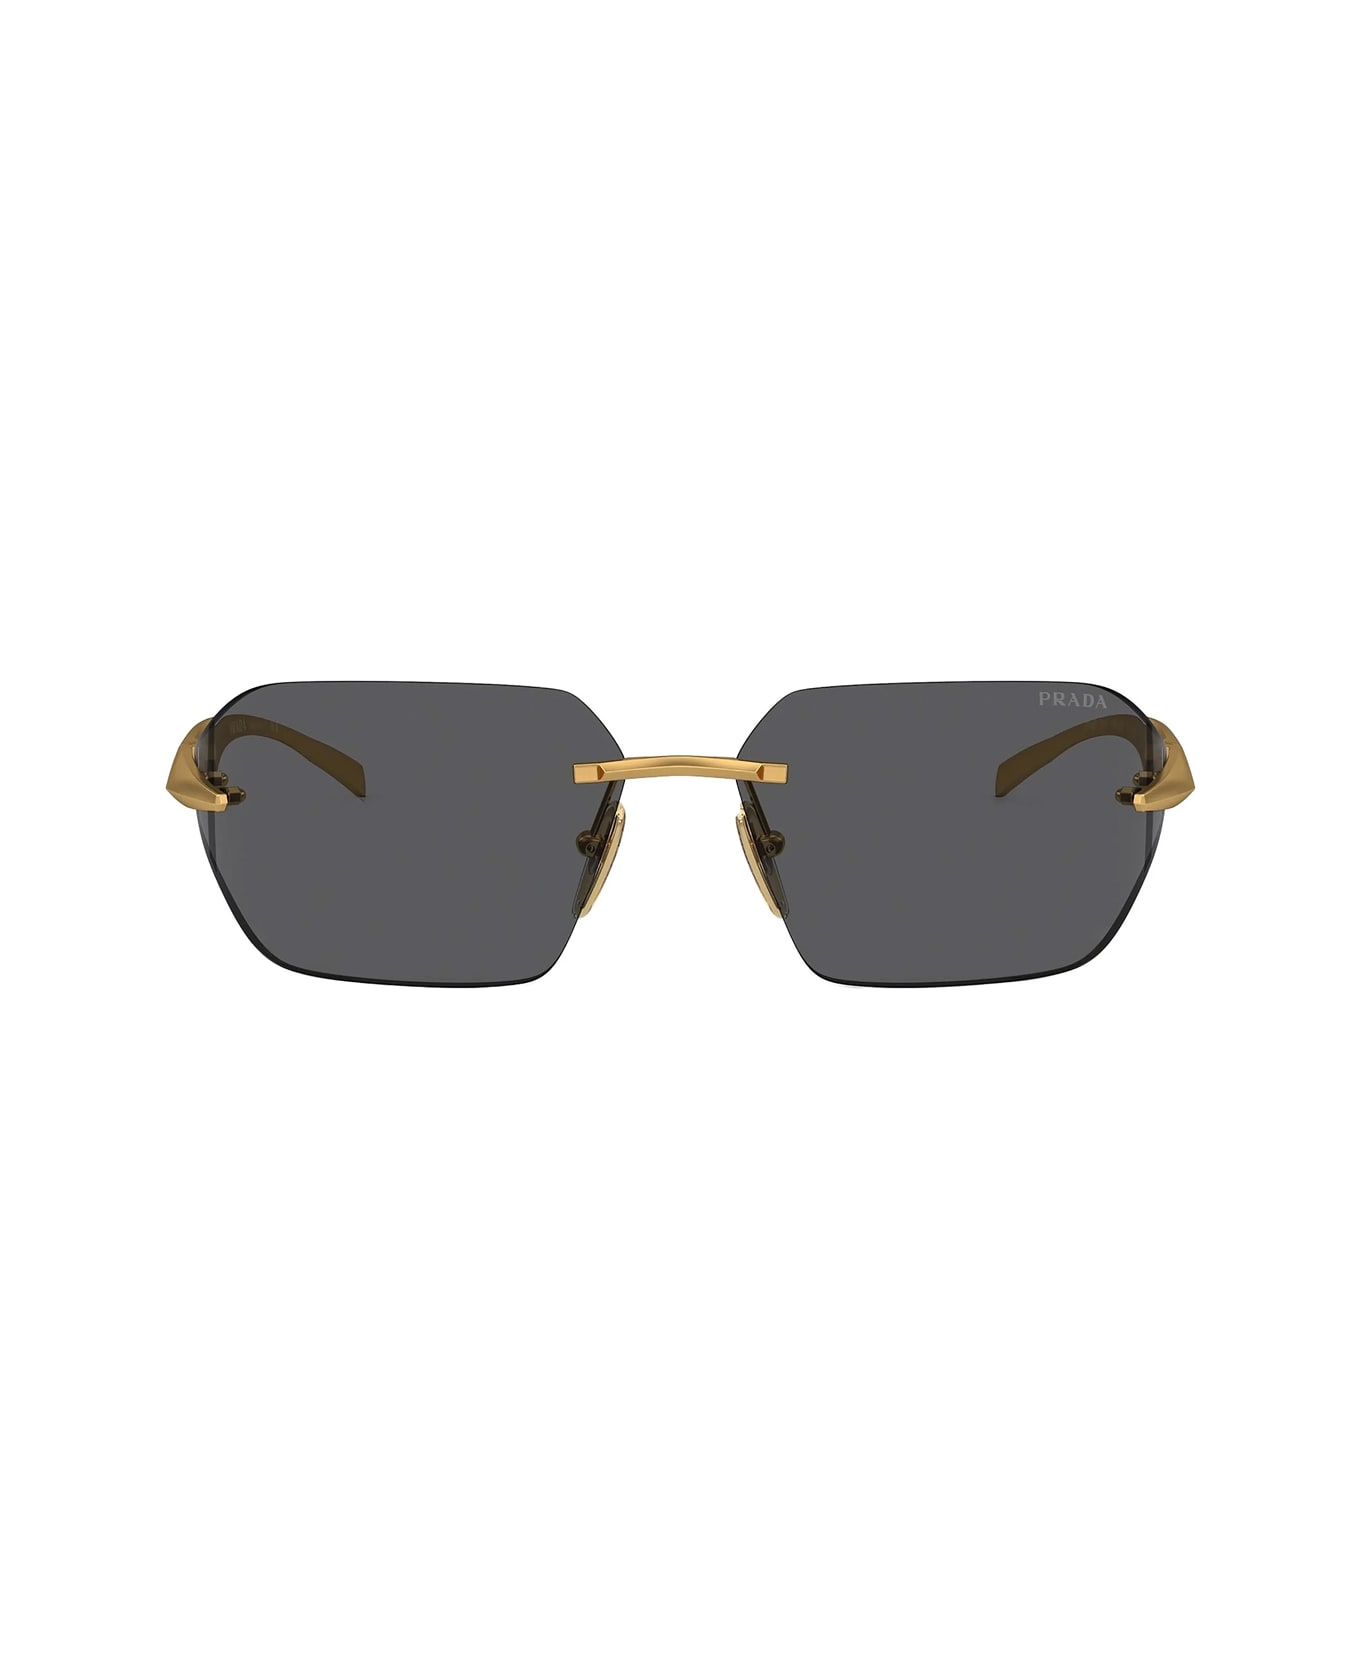 Prada Eyewear Pra56s 15n5s0 Sunglasses Retrosuperfuture - Oro